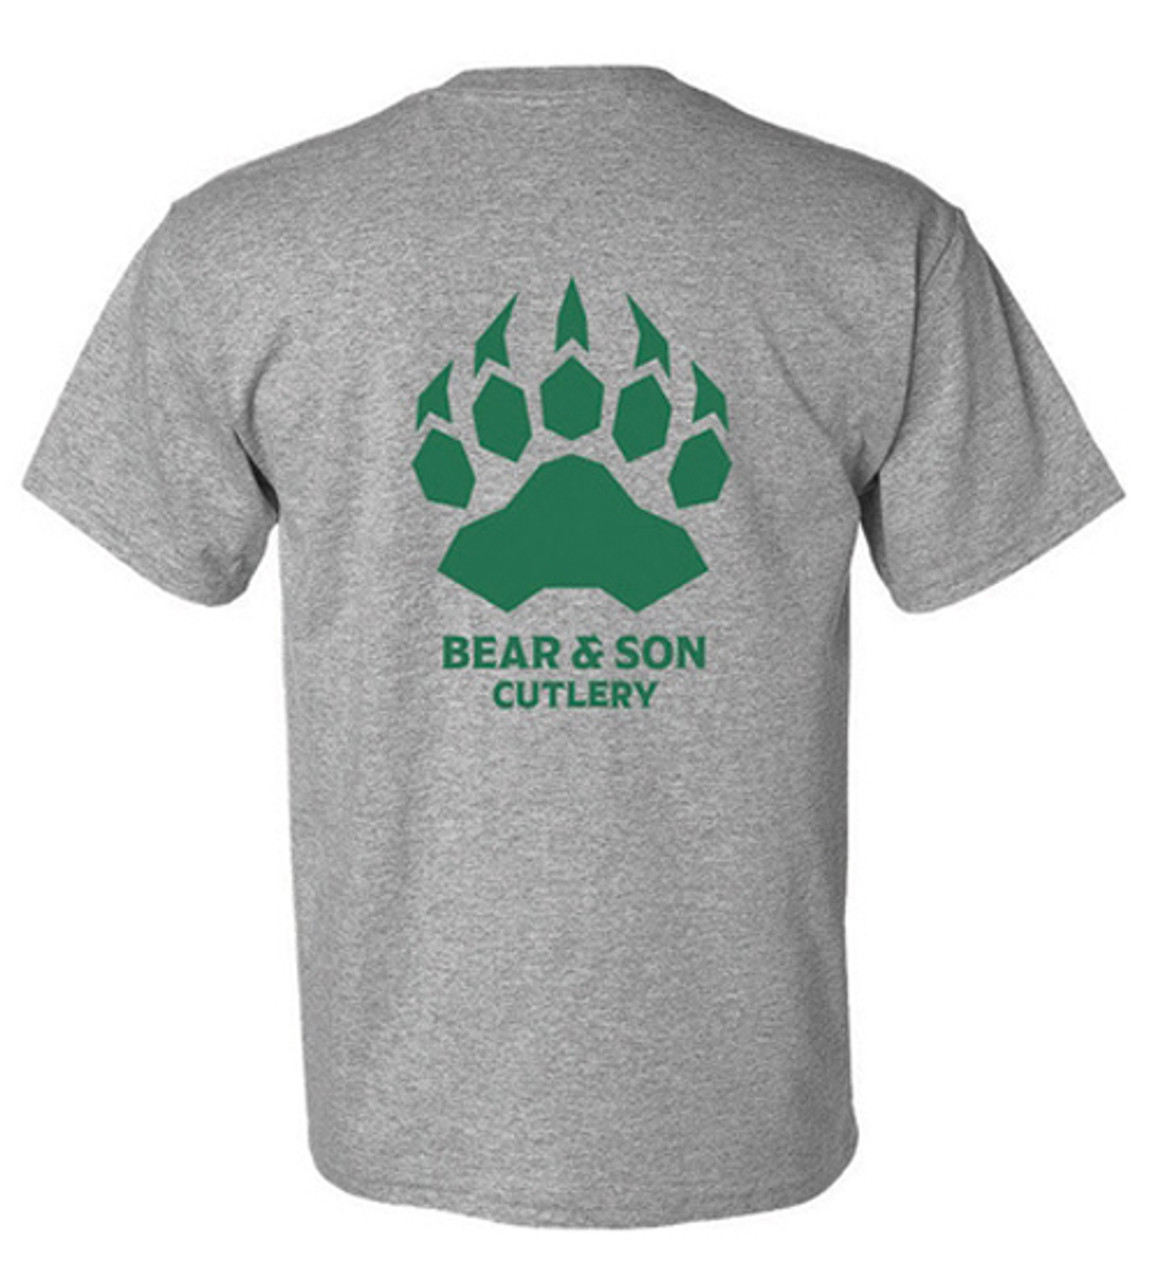 Bear & Son Triple X T-Shirt - "Just Flip It" Large Gray Cotton & Polyester